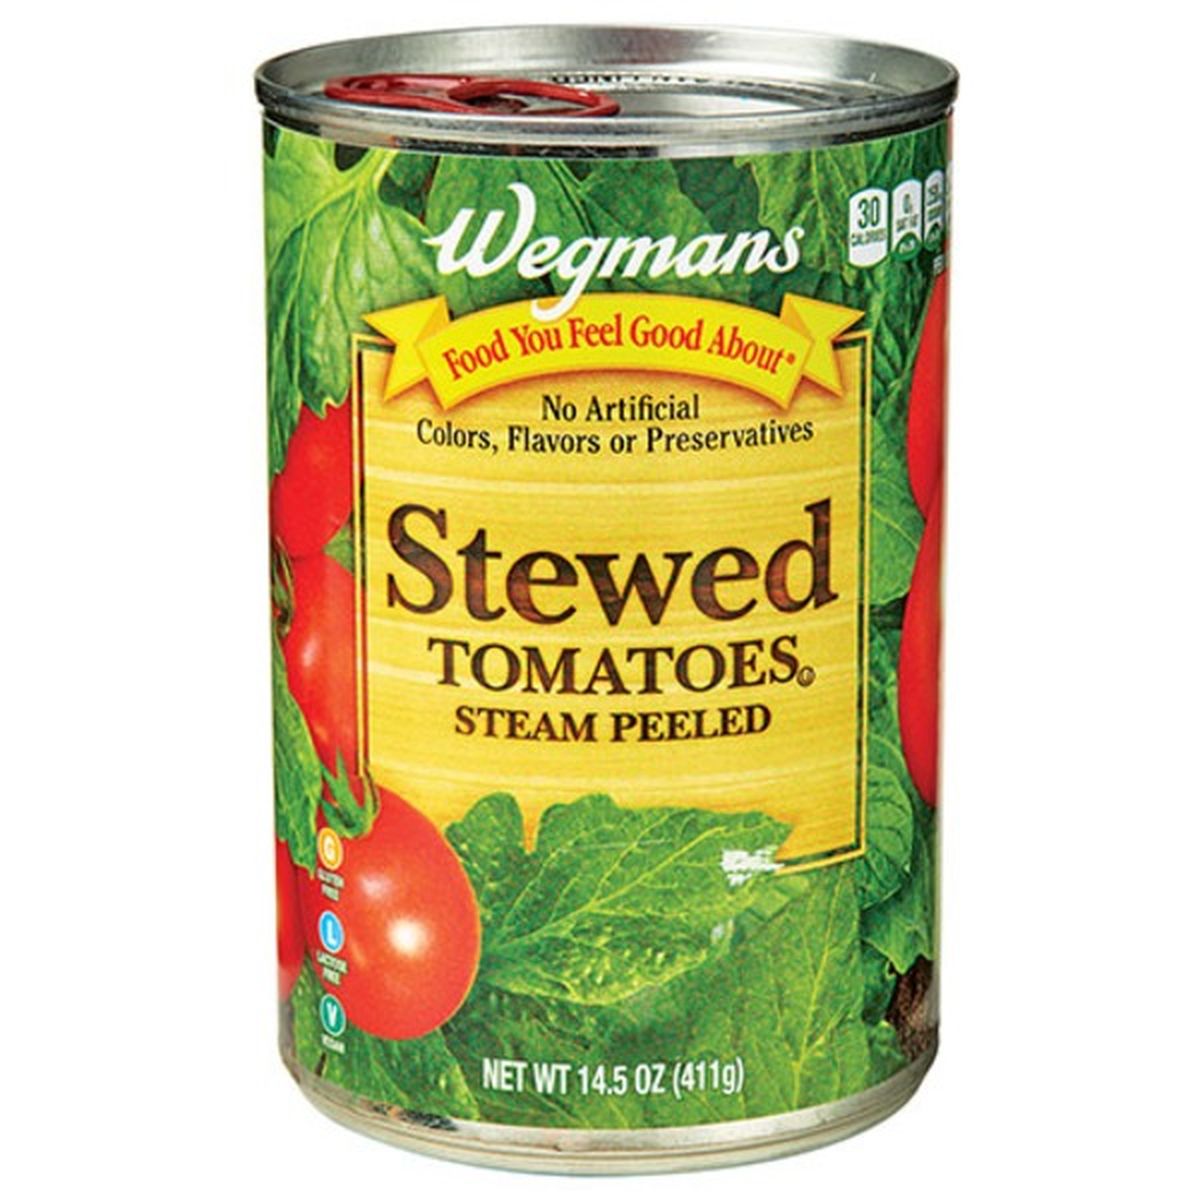 Calories in Wegmans Stewed Tomatoes